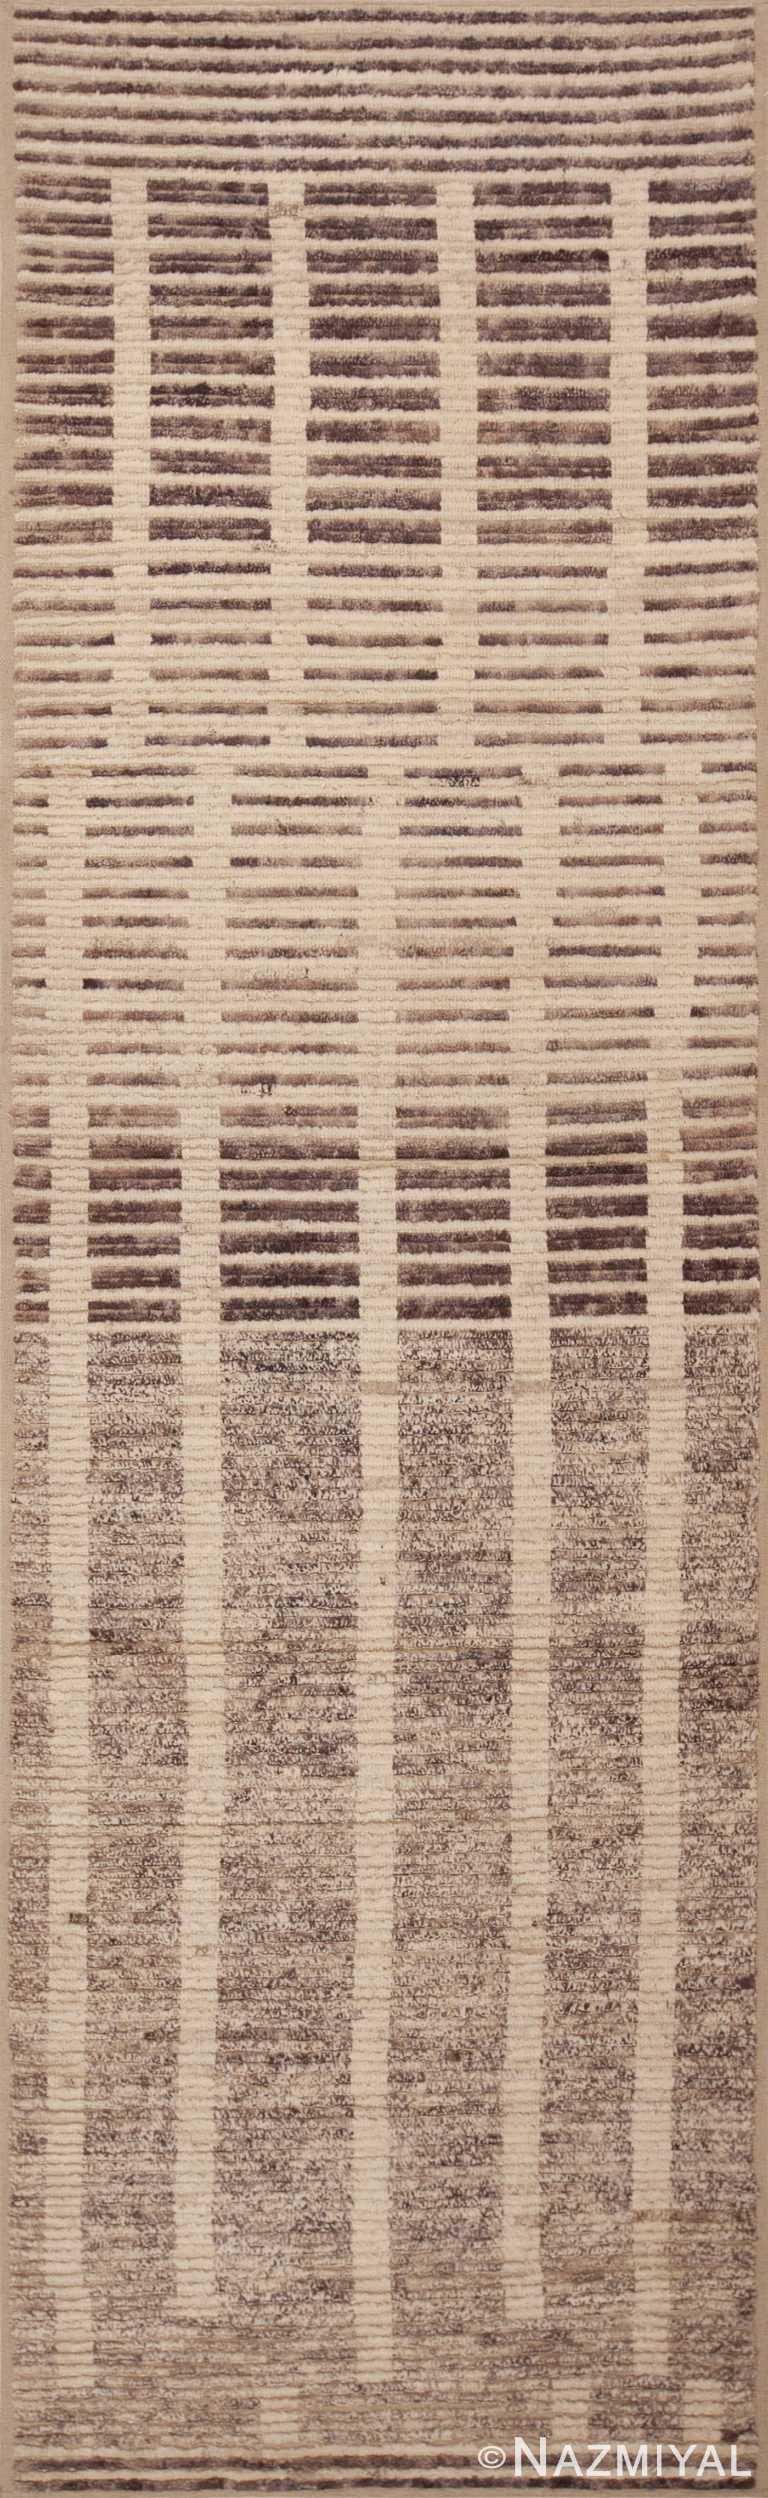 Neutral Color Artistic Tribal Geometric Pattern Modern Hallway Runner Rug 11141 by Nazmiyal Antique rugs